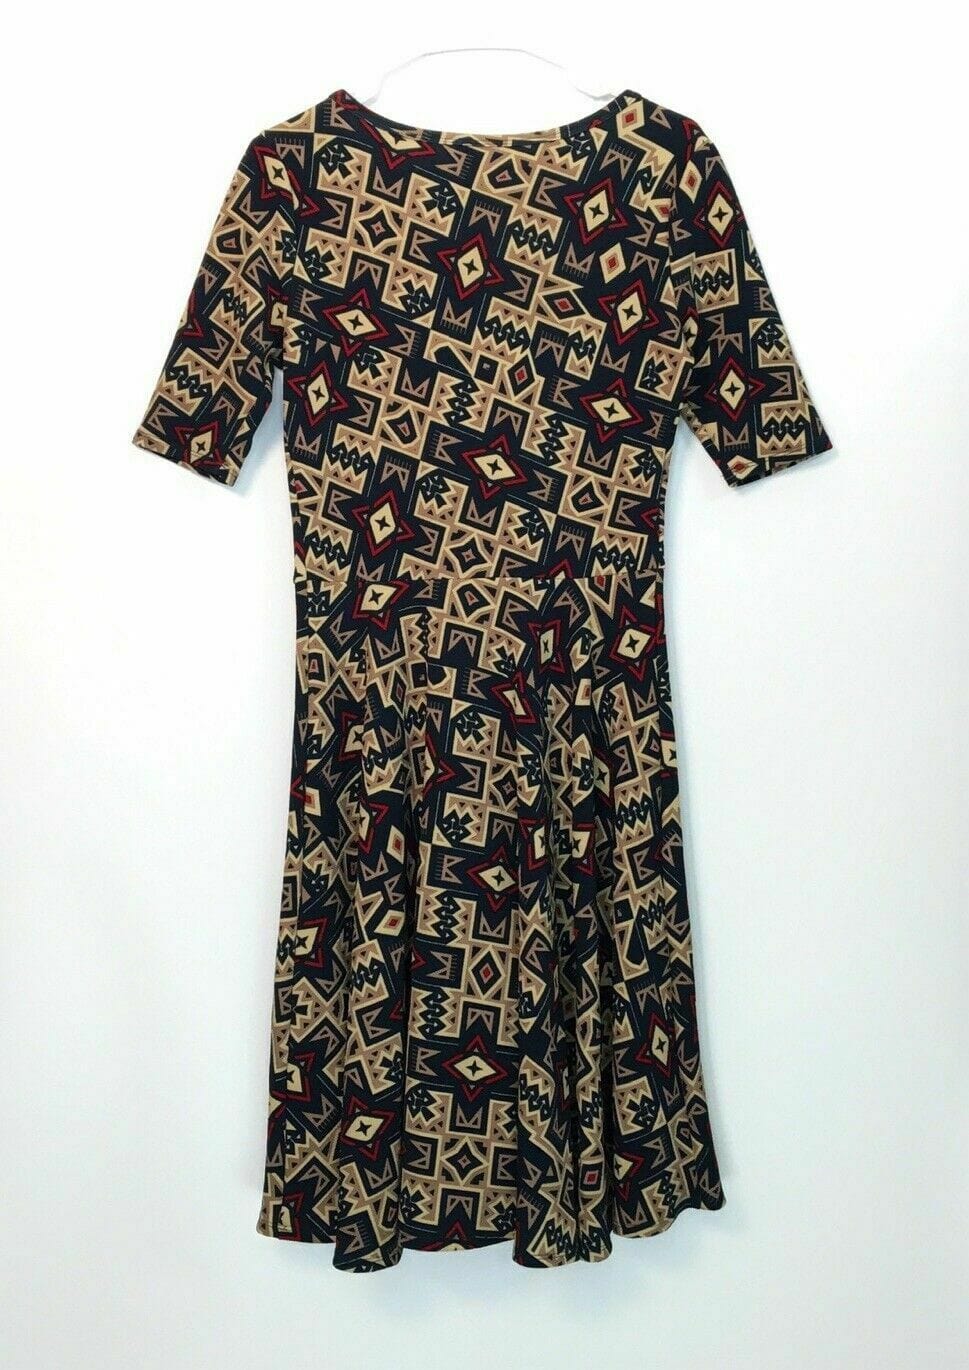 LuLaRoe Womens Nicole Navy & Tan Print Short Sleeve A-Line Dress Size M